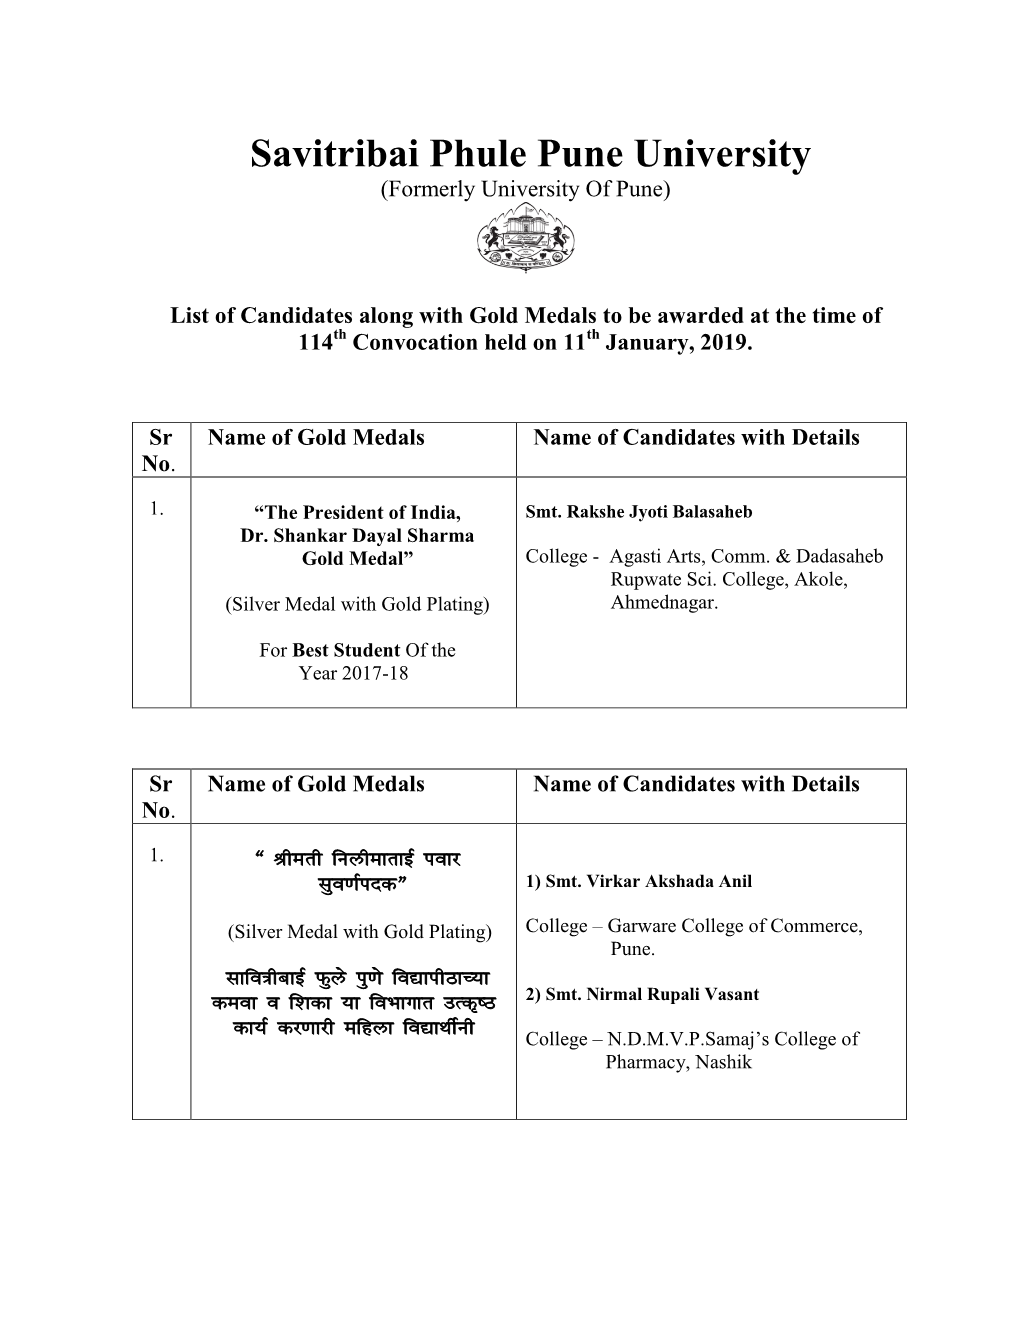 Savitribai Phule Pune University (Formerly University of Pune)